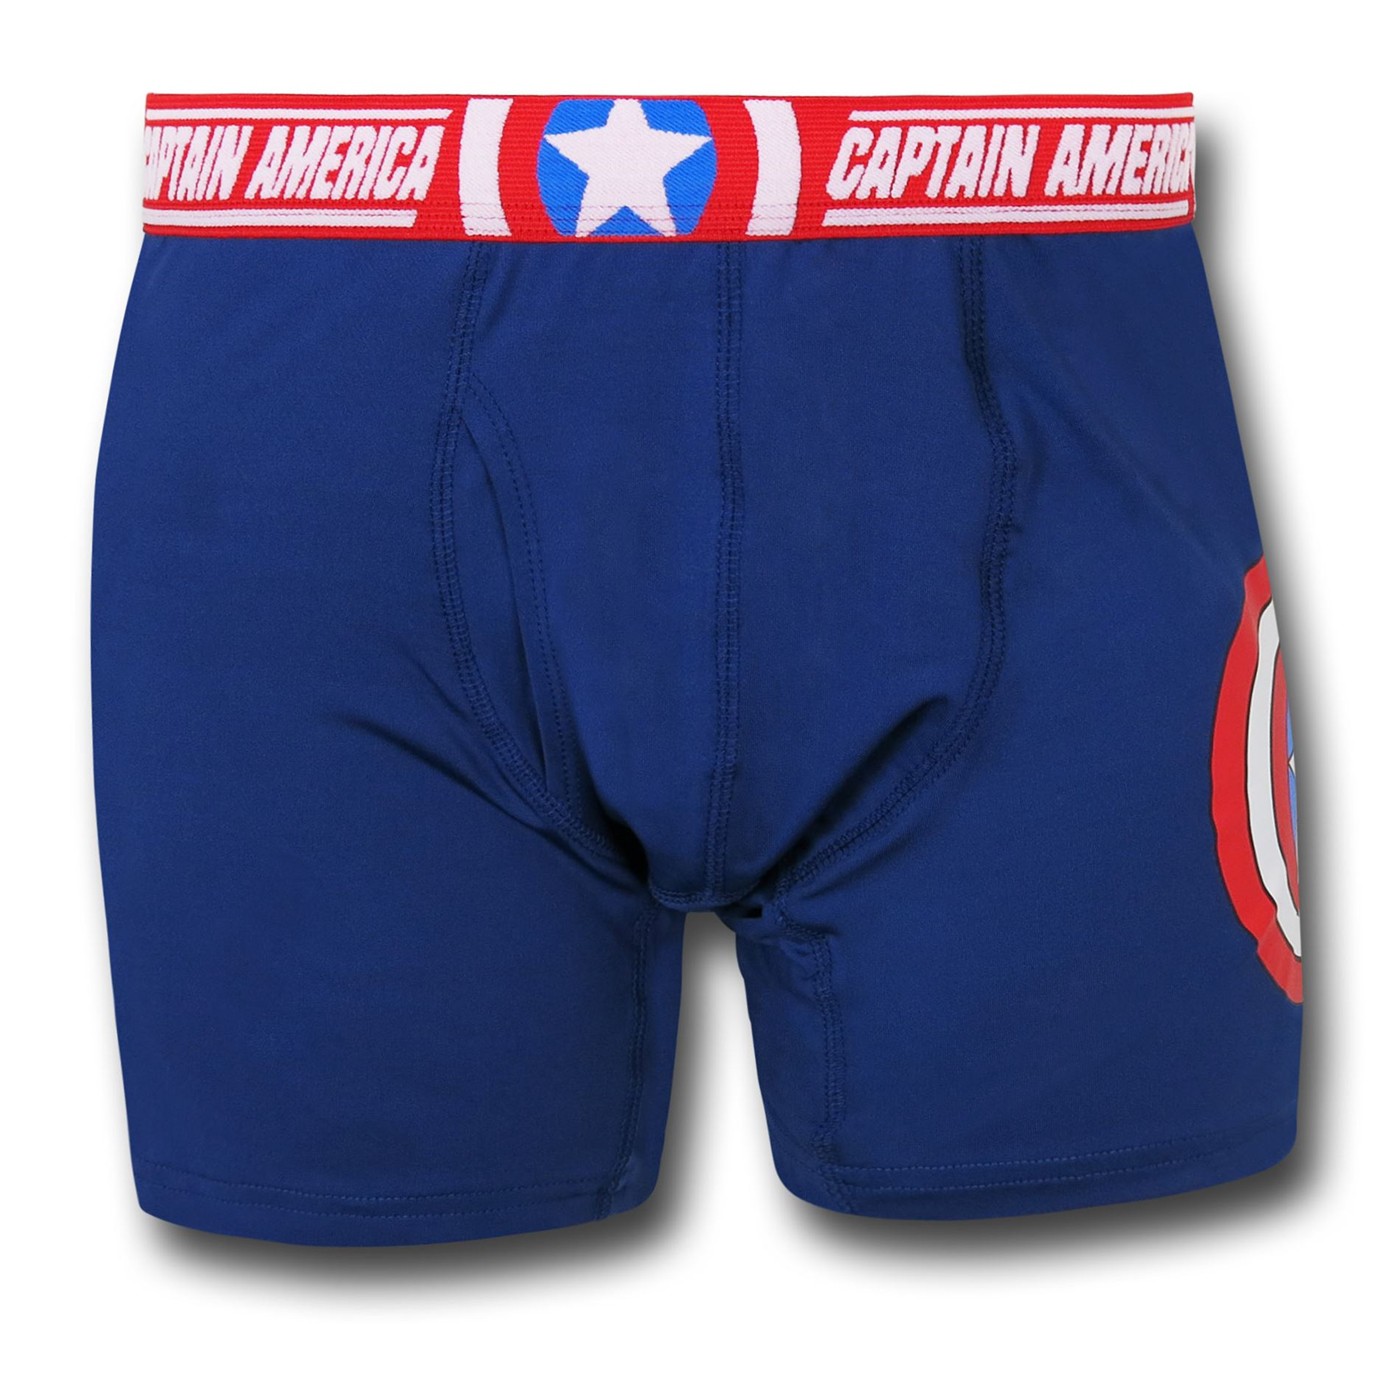 Captain America Symbol and Waist Boxer Briefs